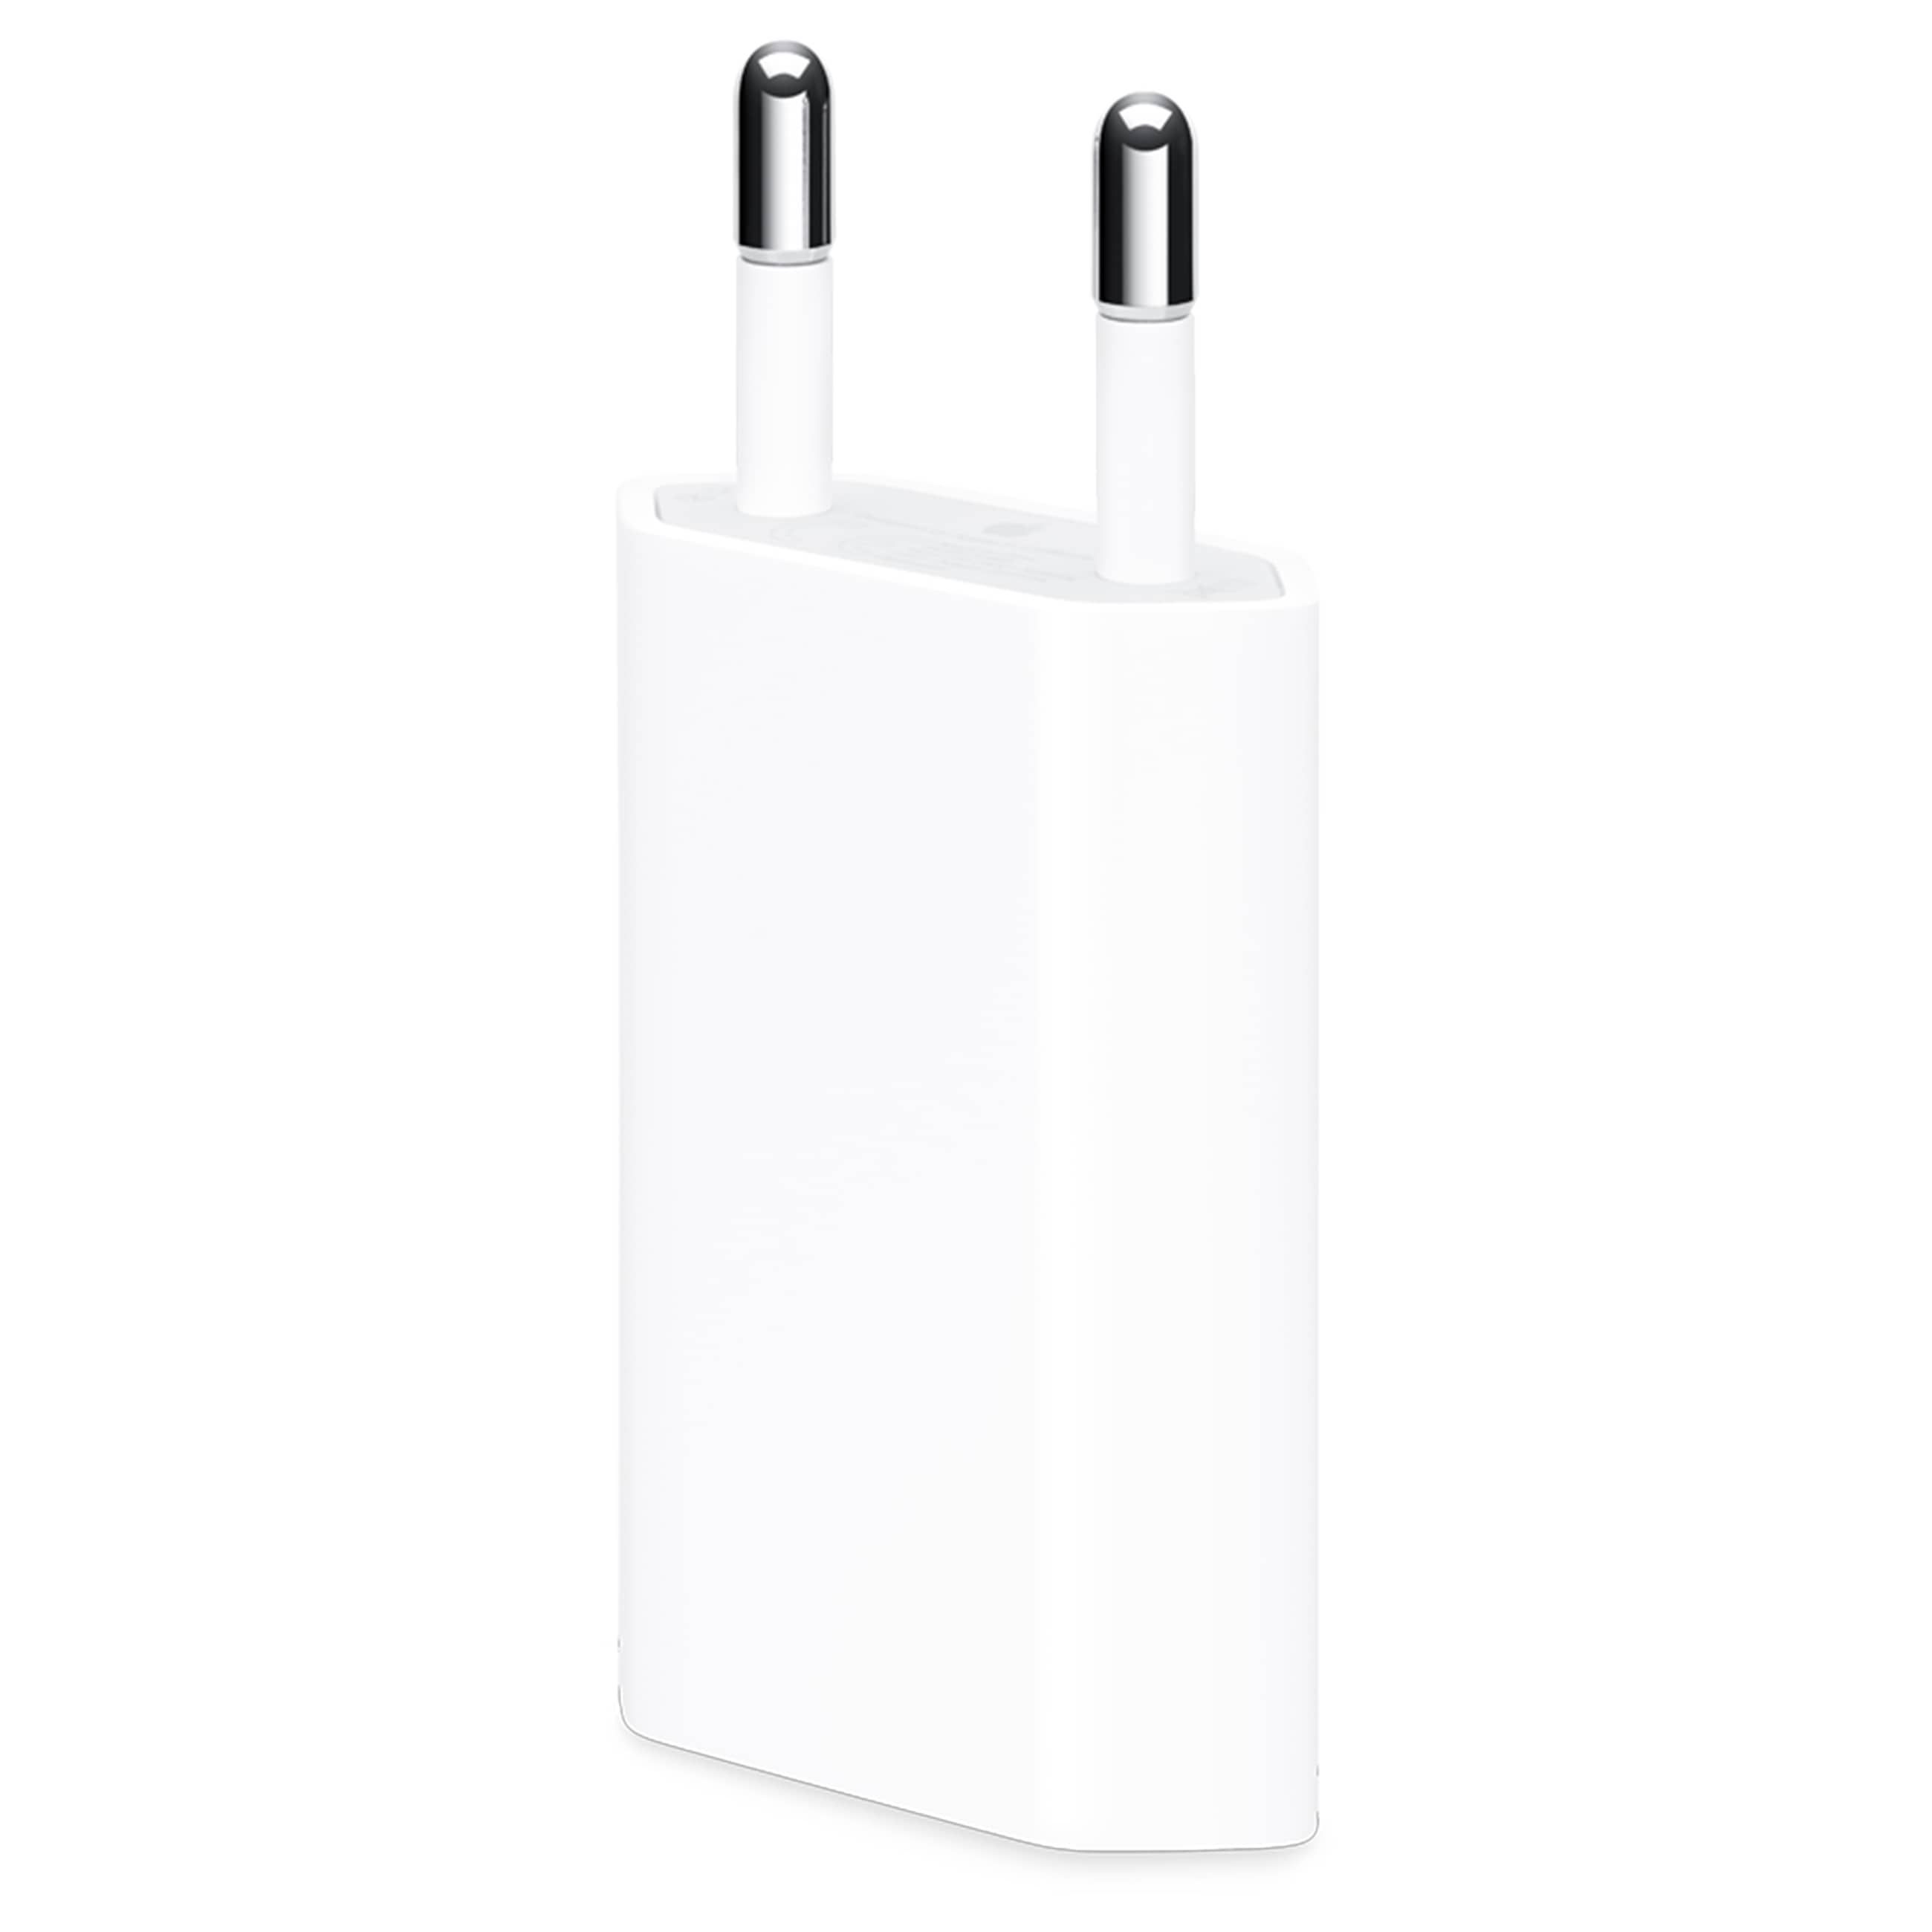 Apple USB Power Adapter - Ladegerät